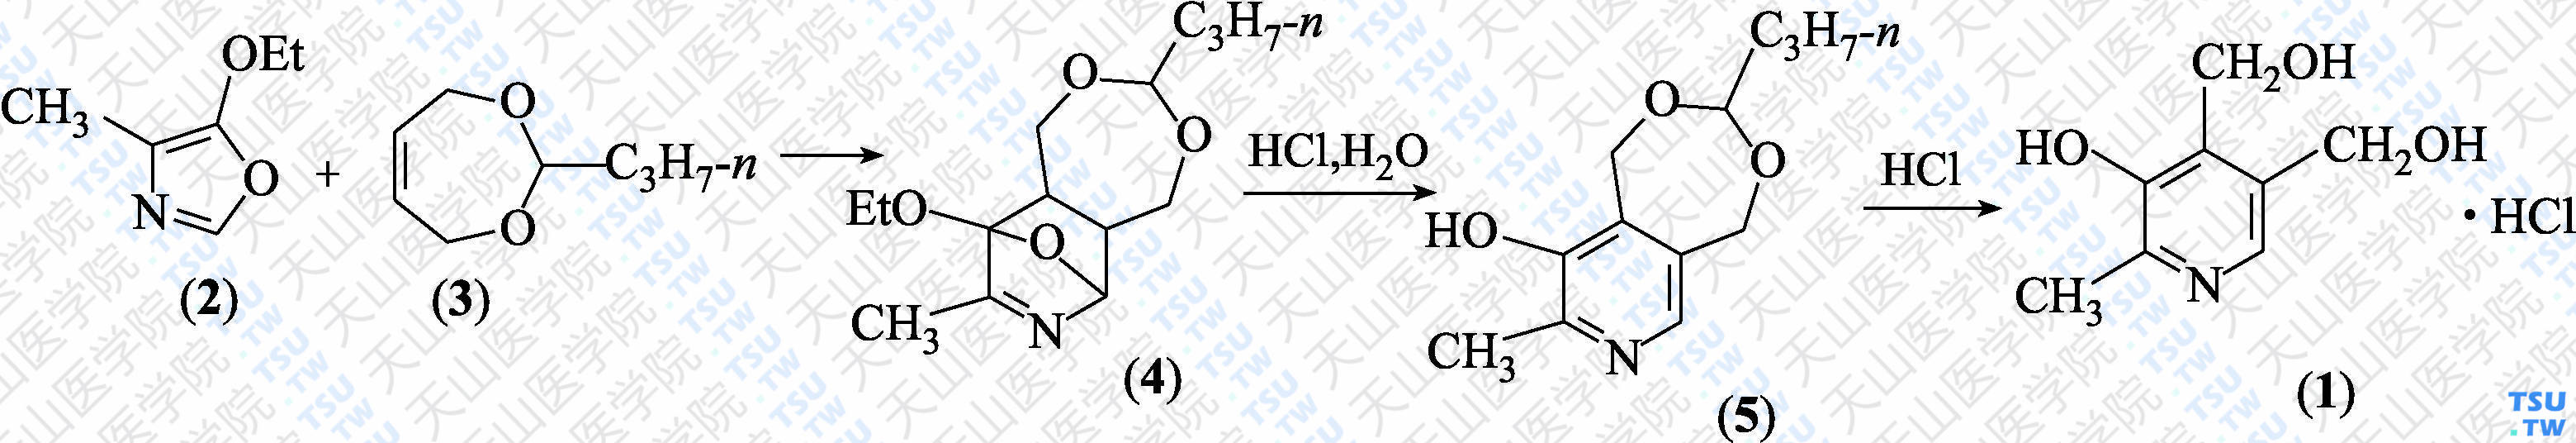 维生素B<sub>6</sub>（分子式：C<sub>8</sub>H<sub>11</sub>NO<sub>3</sub>·HCl）的合成方法路线及其结构式